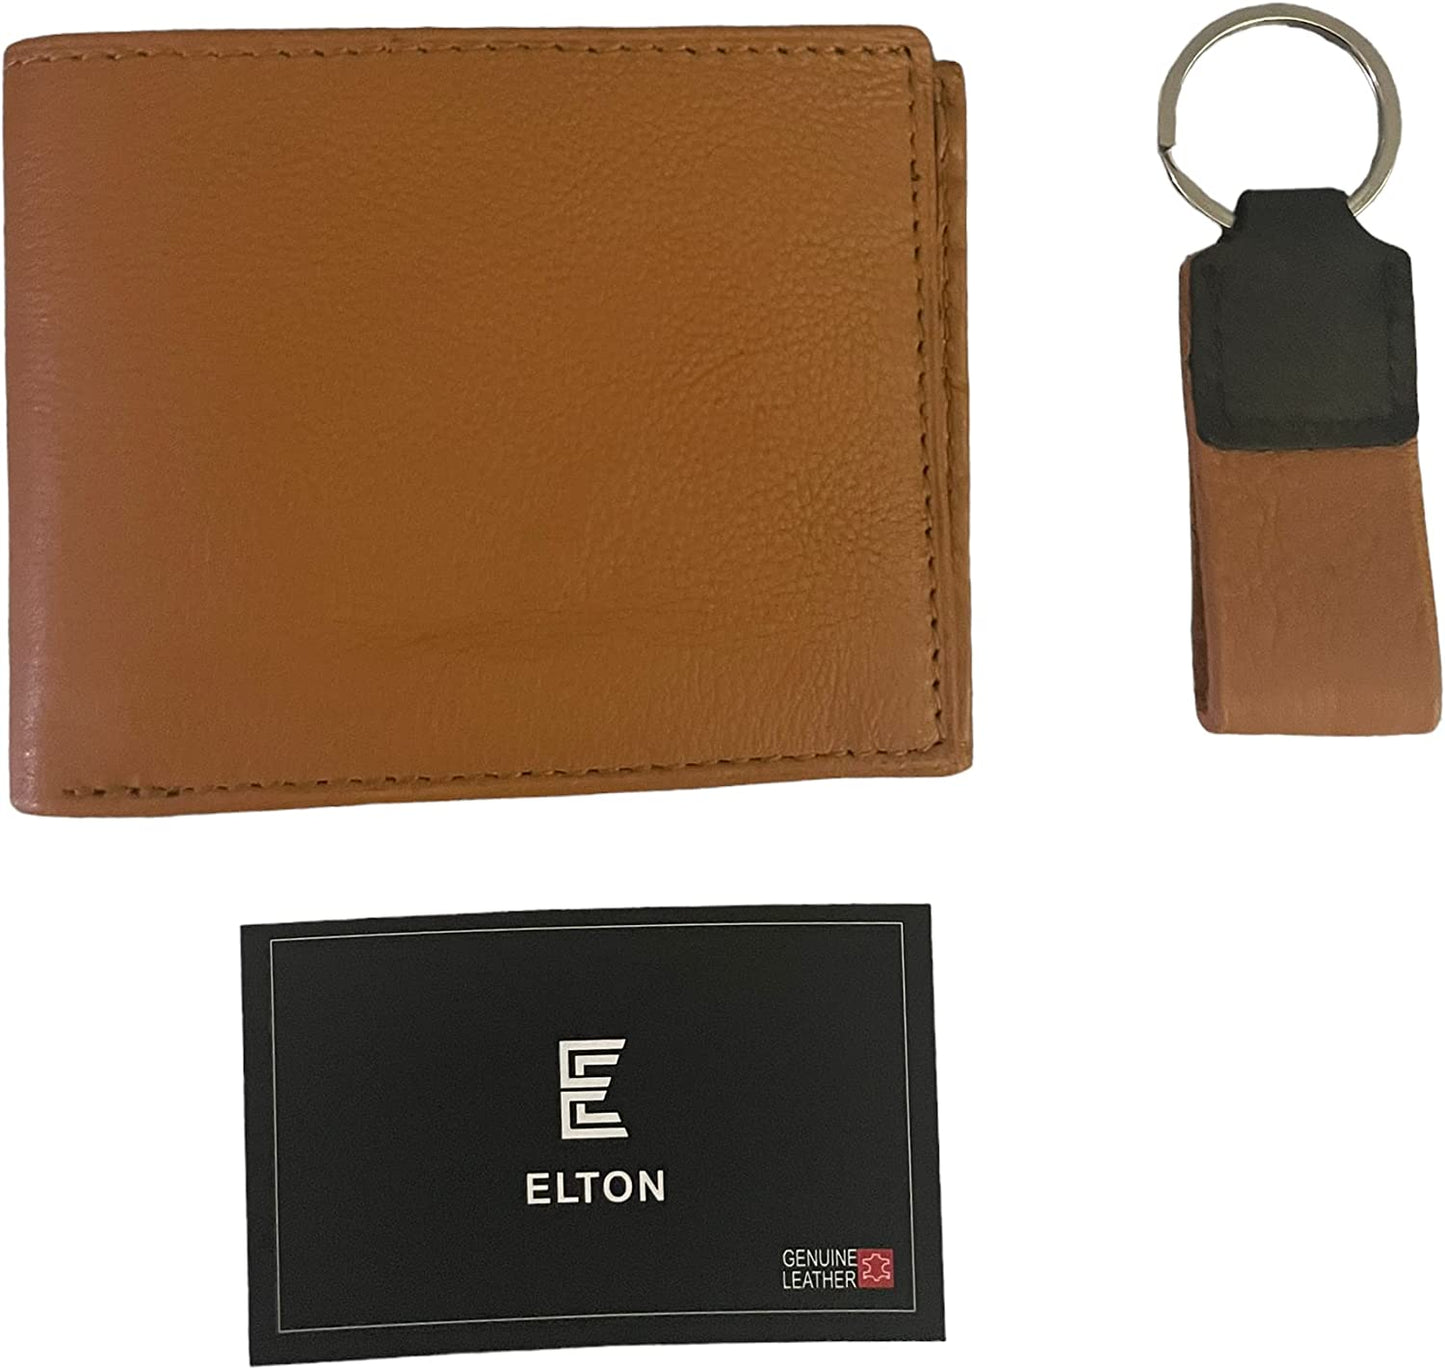 E ELTON Genuine Lambskin Soft Leather Bifold Wallet with Key Chain Tan